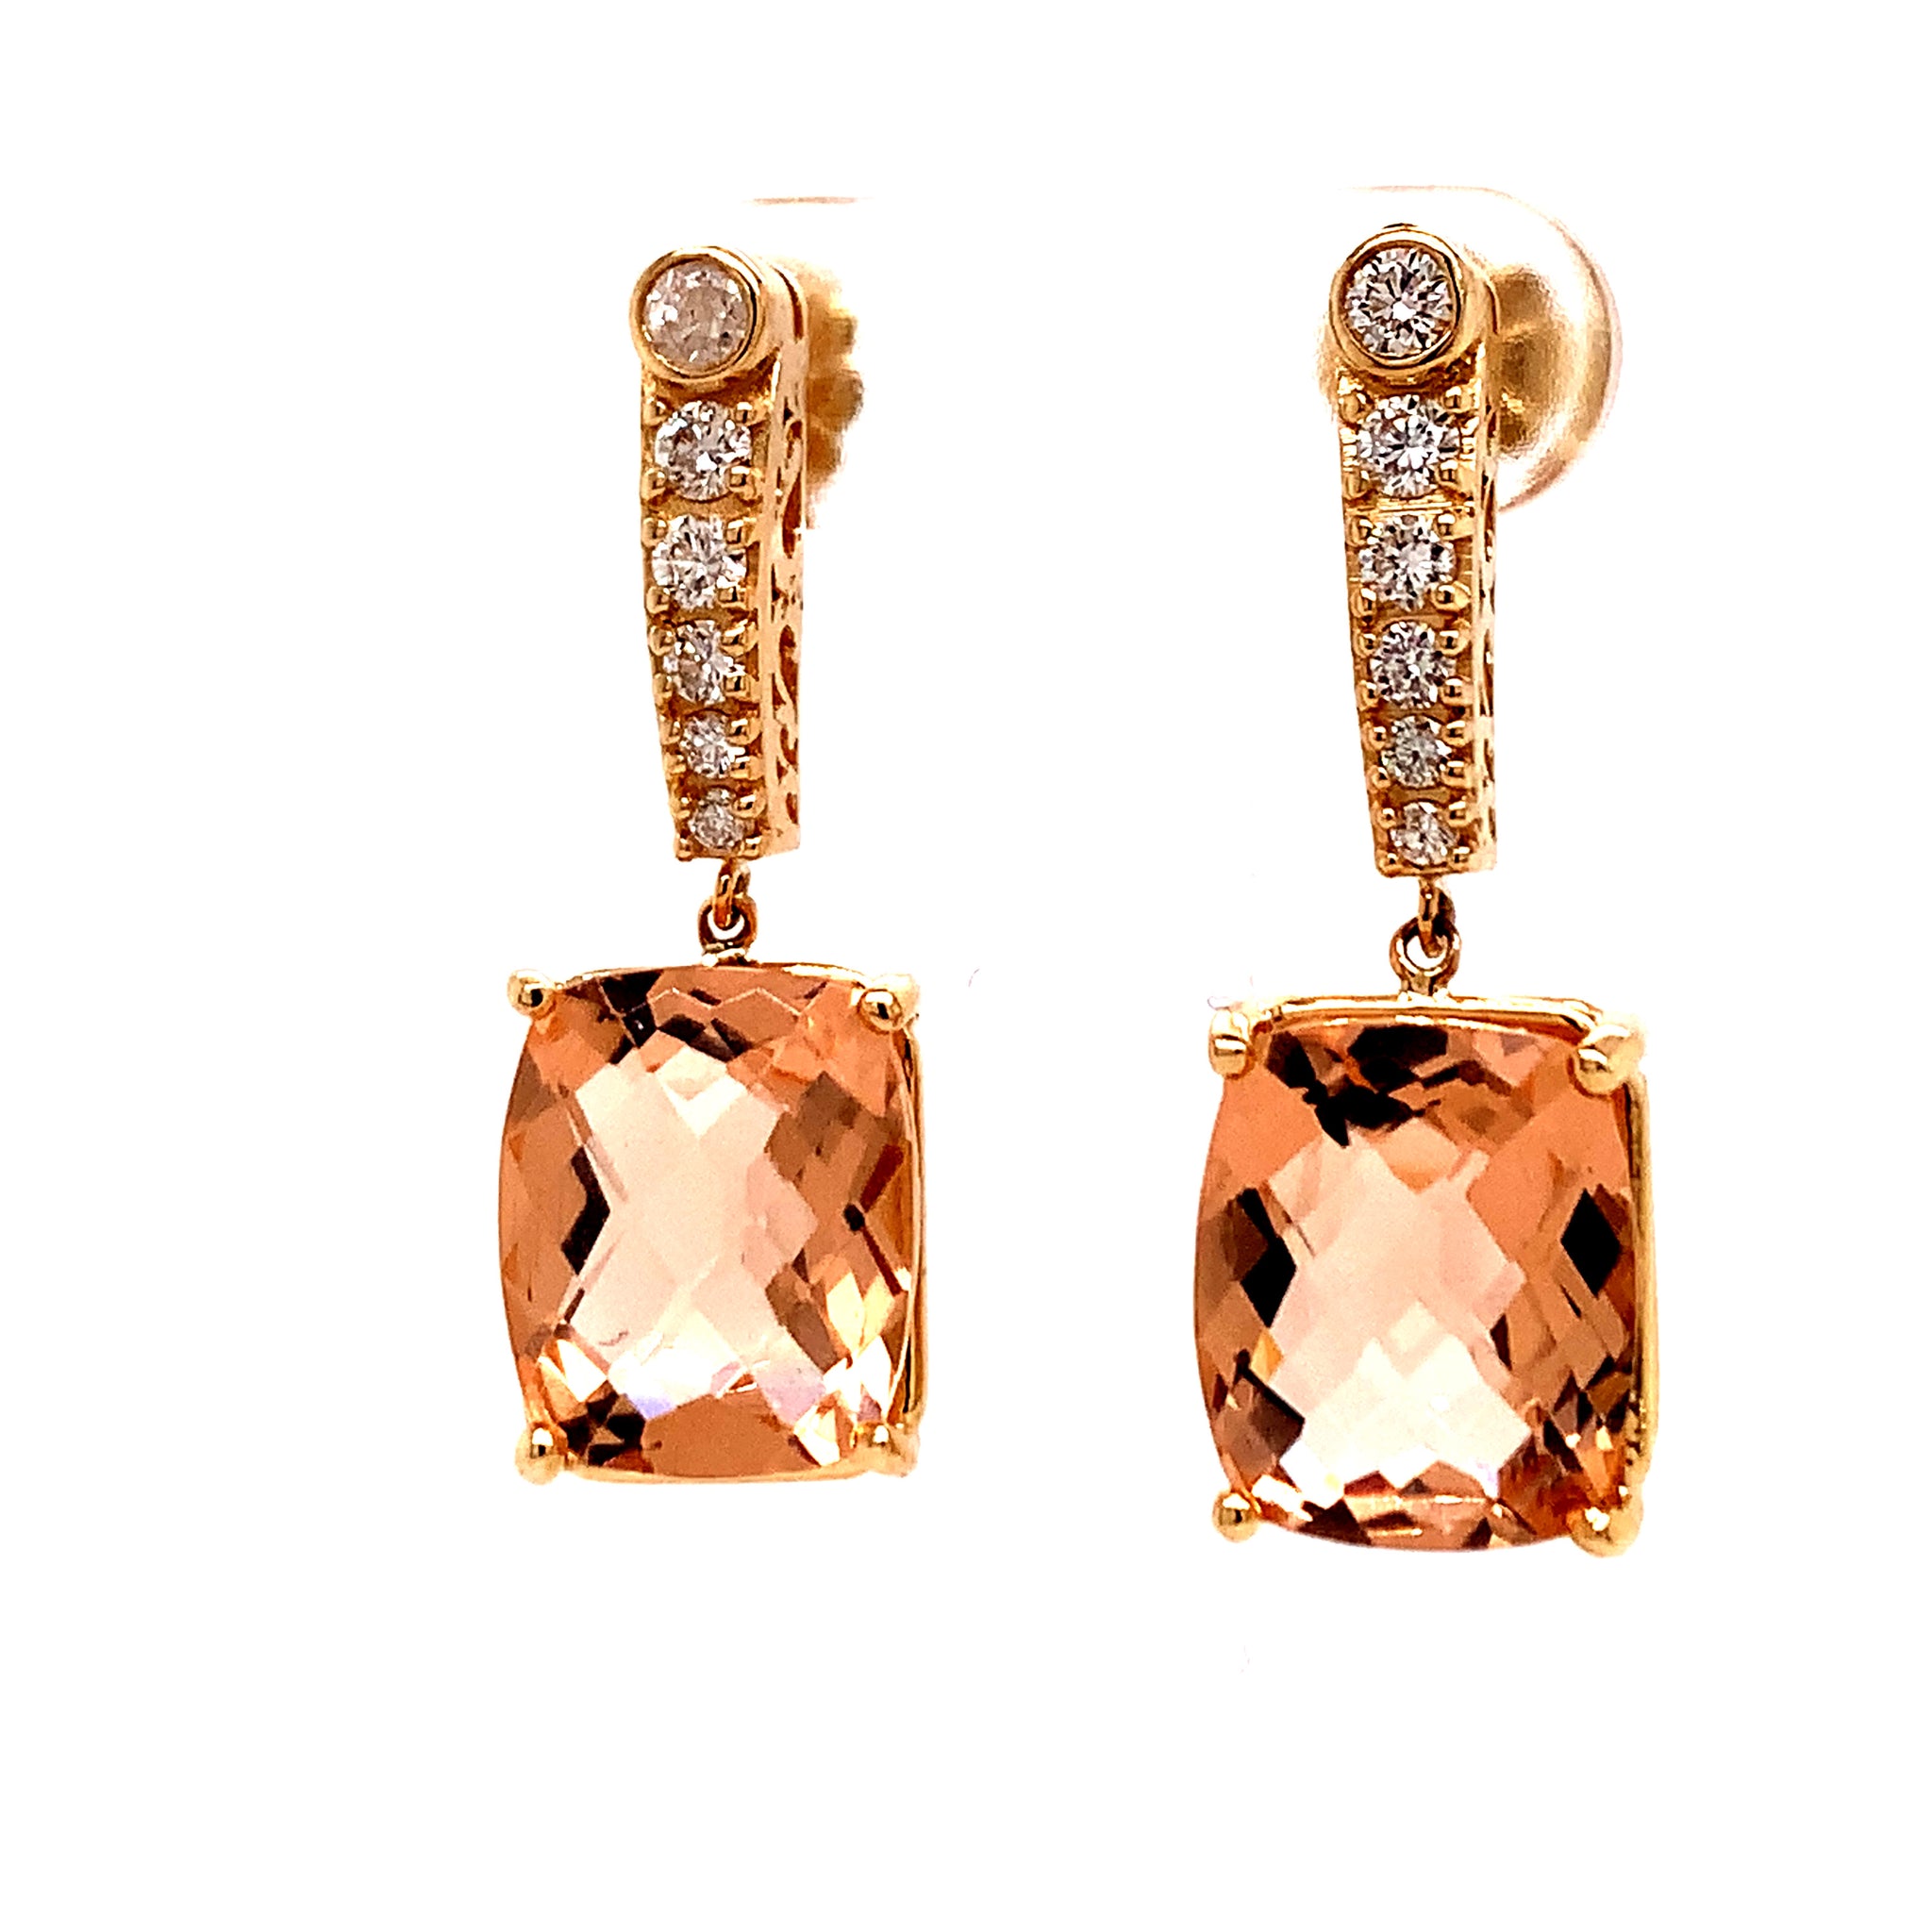 Natural Morganite Diamond Earrings 14k Gold 9.93 TCW Certified $5,950 018685 - Certified Estate Jewelry